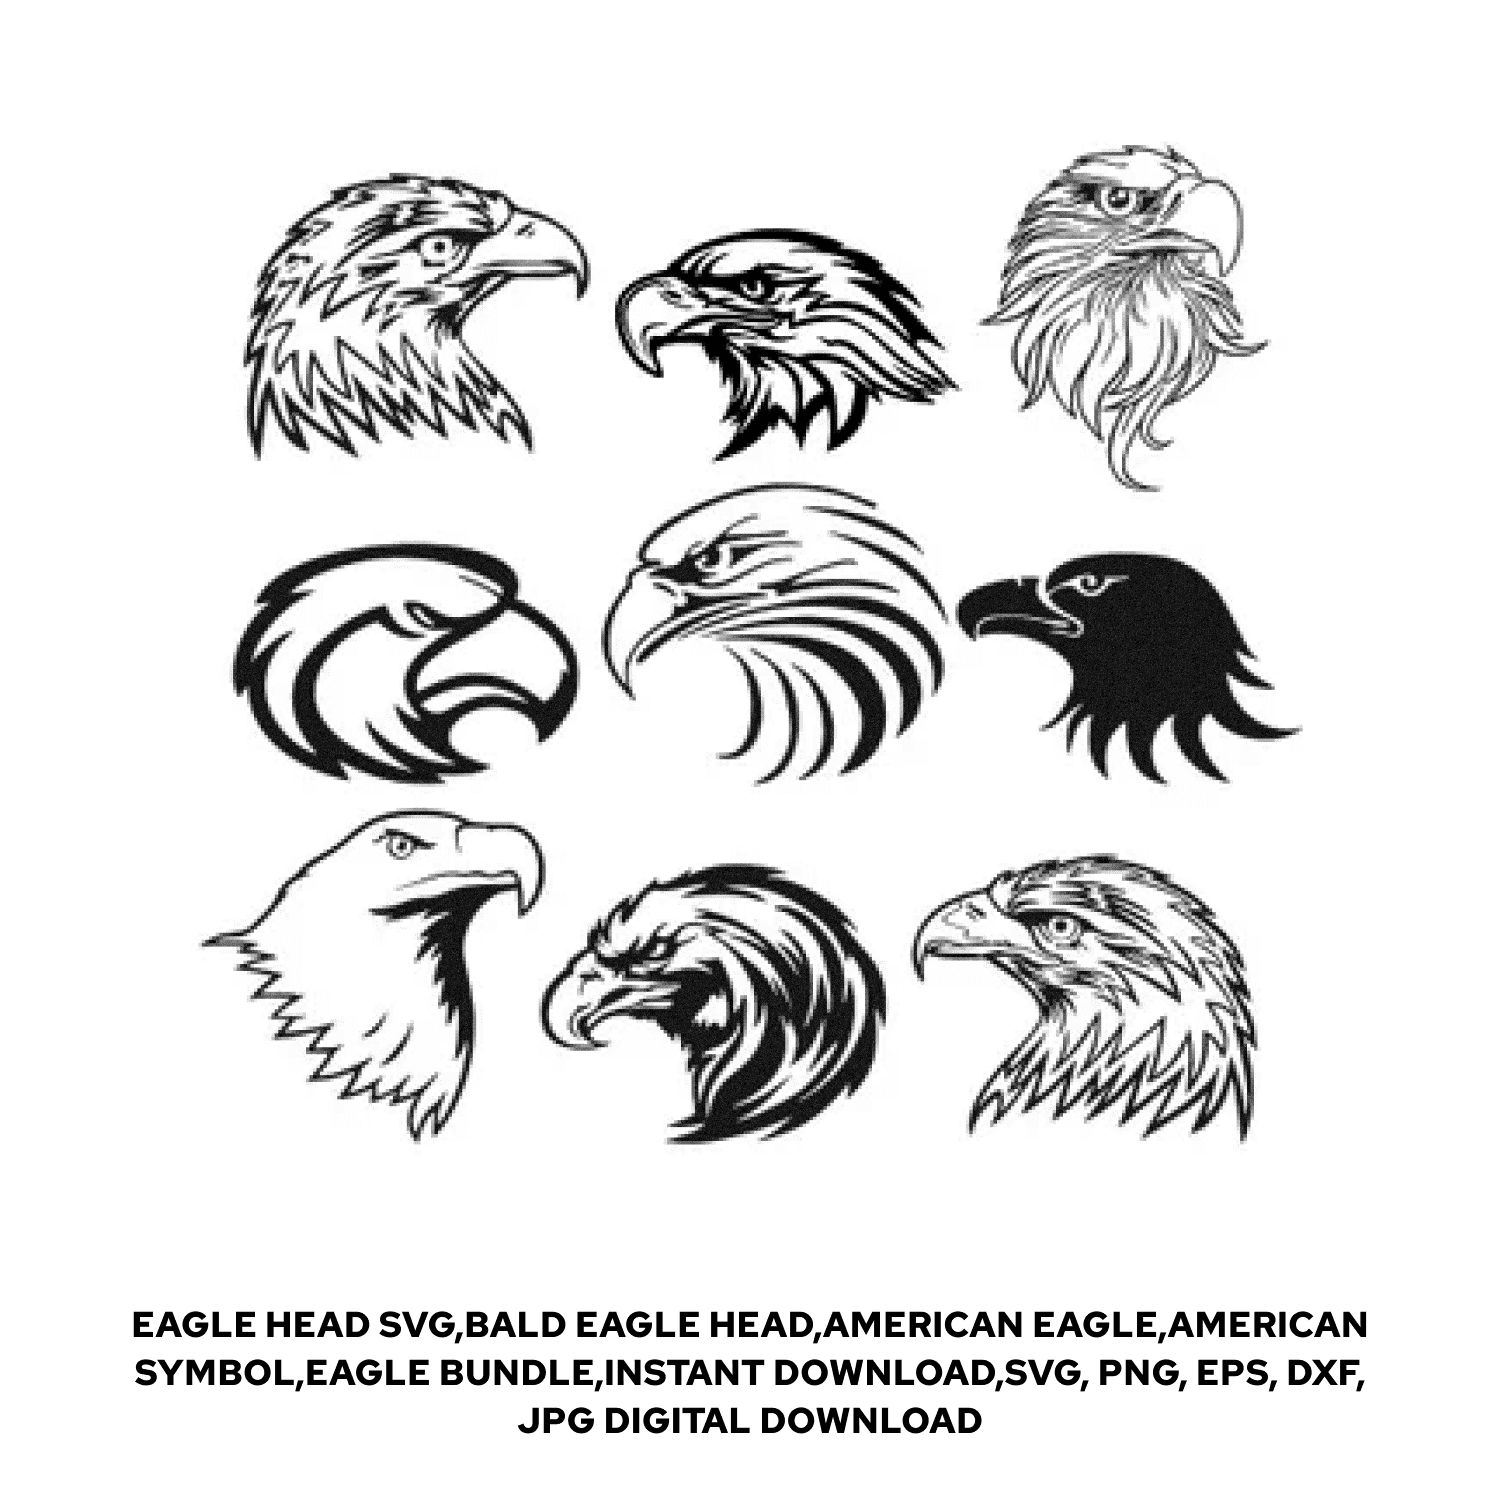 Eagle heads and eagle head tattoo designs on a white background.